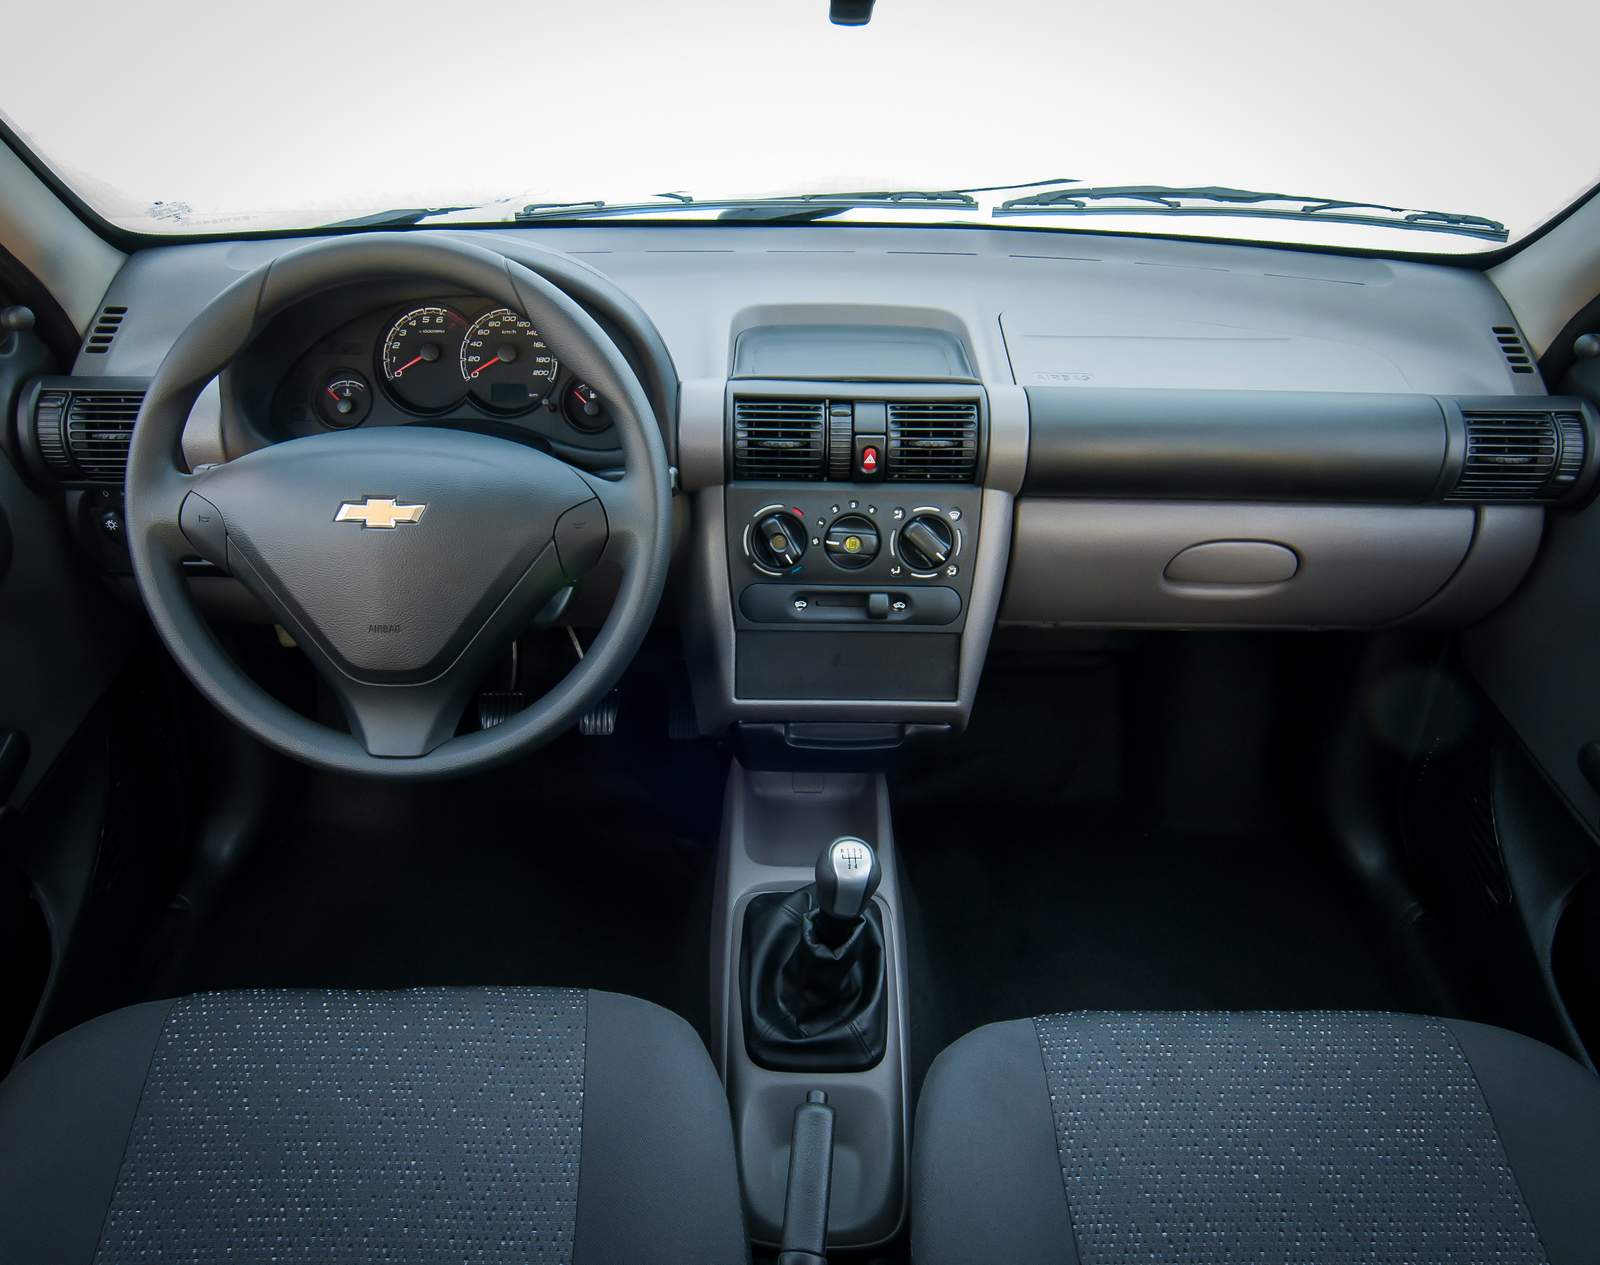 Novo Chevrolet Classic 2015 - interior